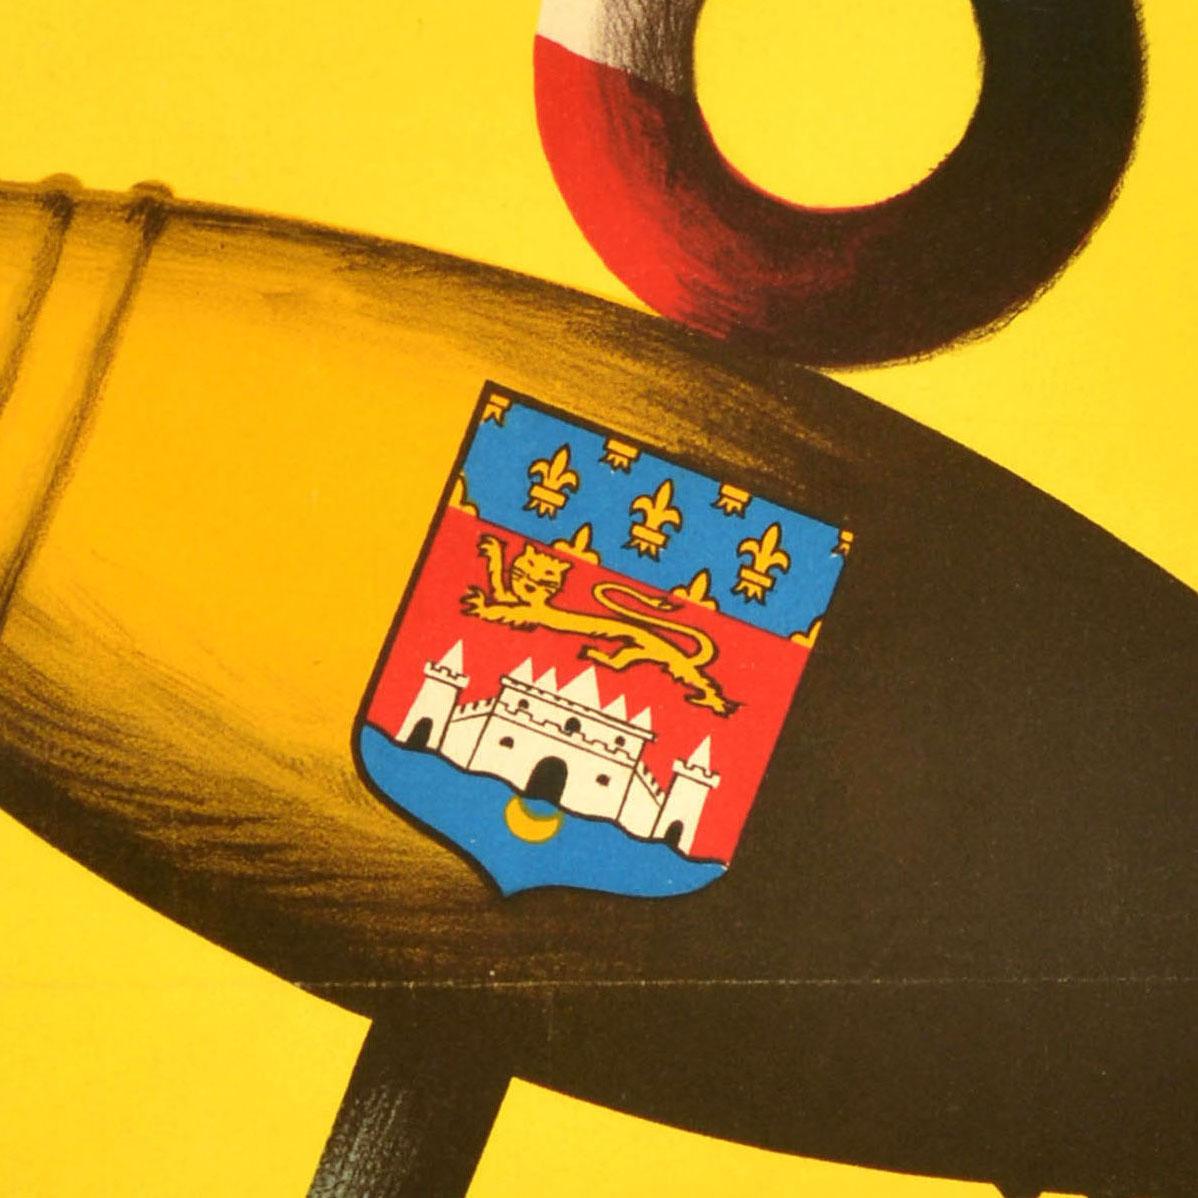 Original vintage drink advertising poster for Bordeaux wines of France - vins de Bordeaux le monde entier les apprecie, vous aussi / Bordeaux wines The whole world appreciates them, you too - featuring a bright and colourful design by the French